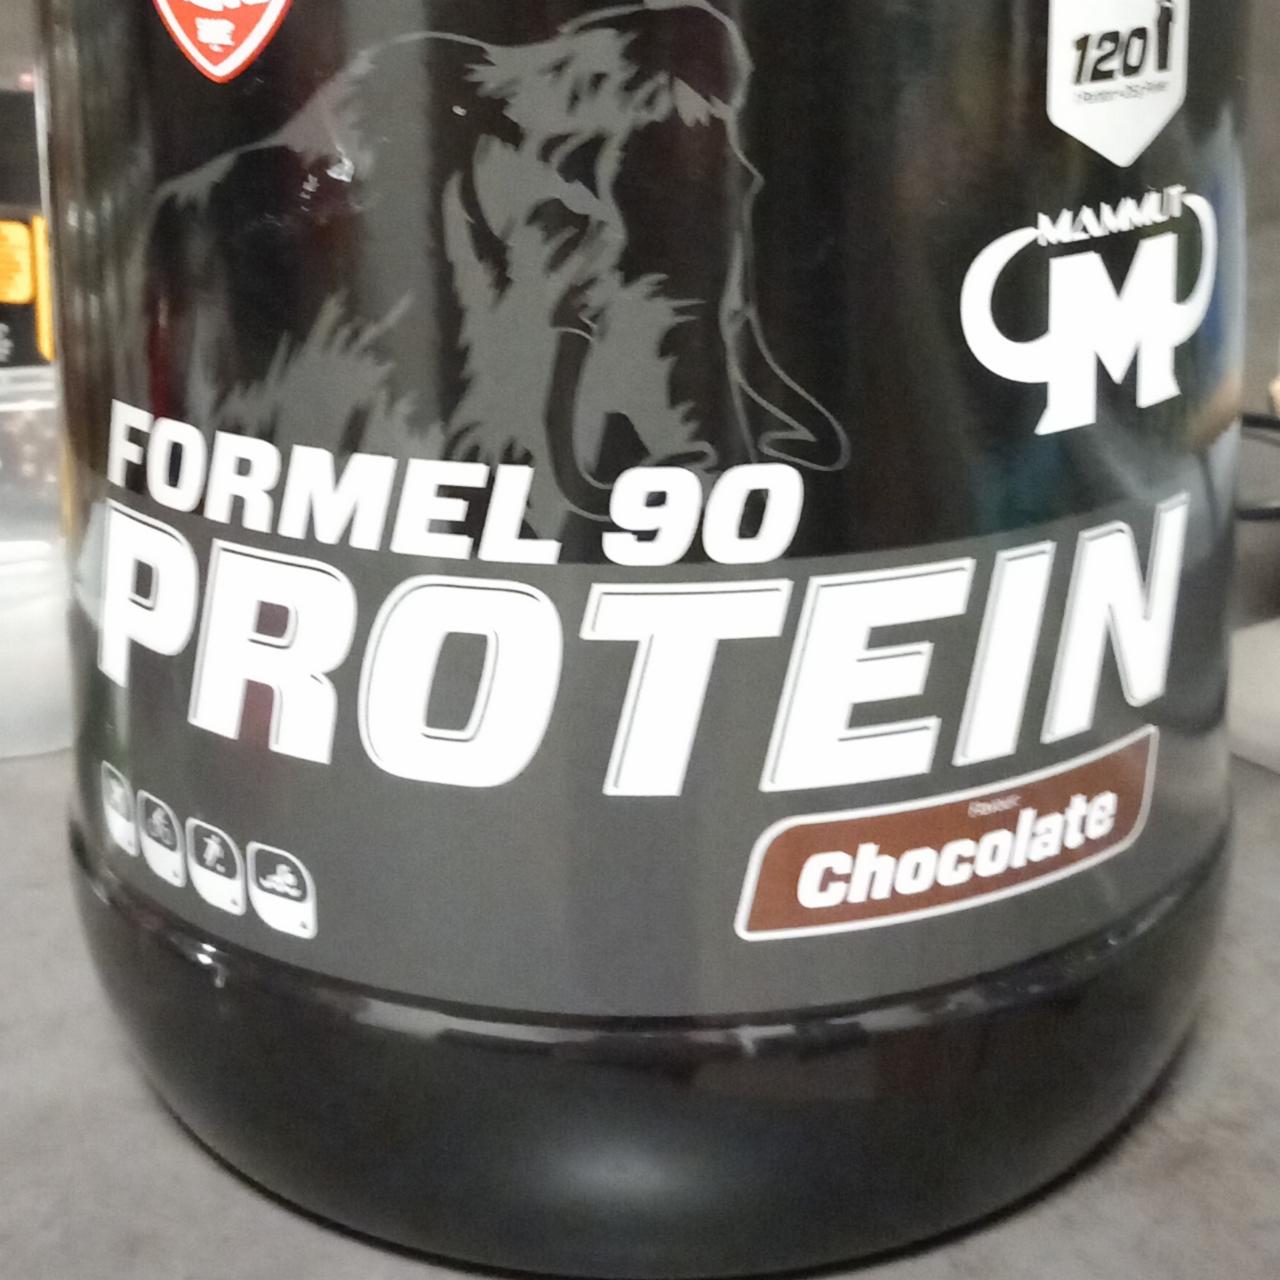 Képek - Formel 90 Protein chocolate Mamut